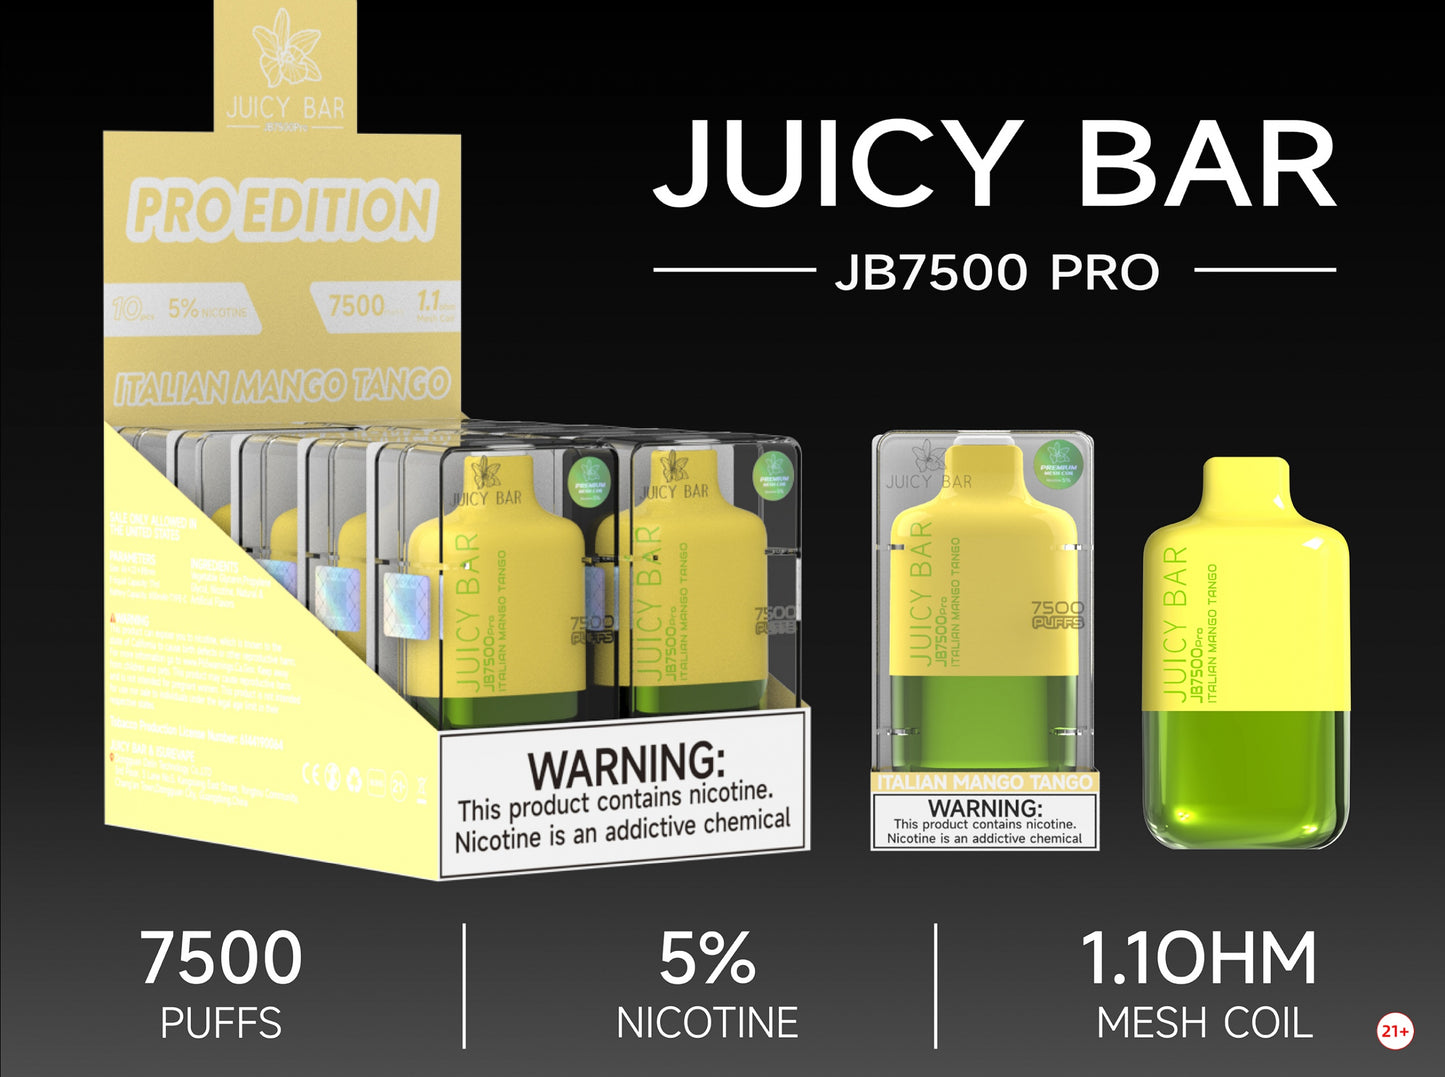 Juicy Bar Pro Edition 7500 Puffs 5% | Italian Mango Tango with packaging